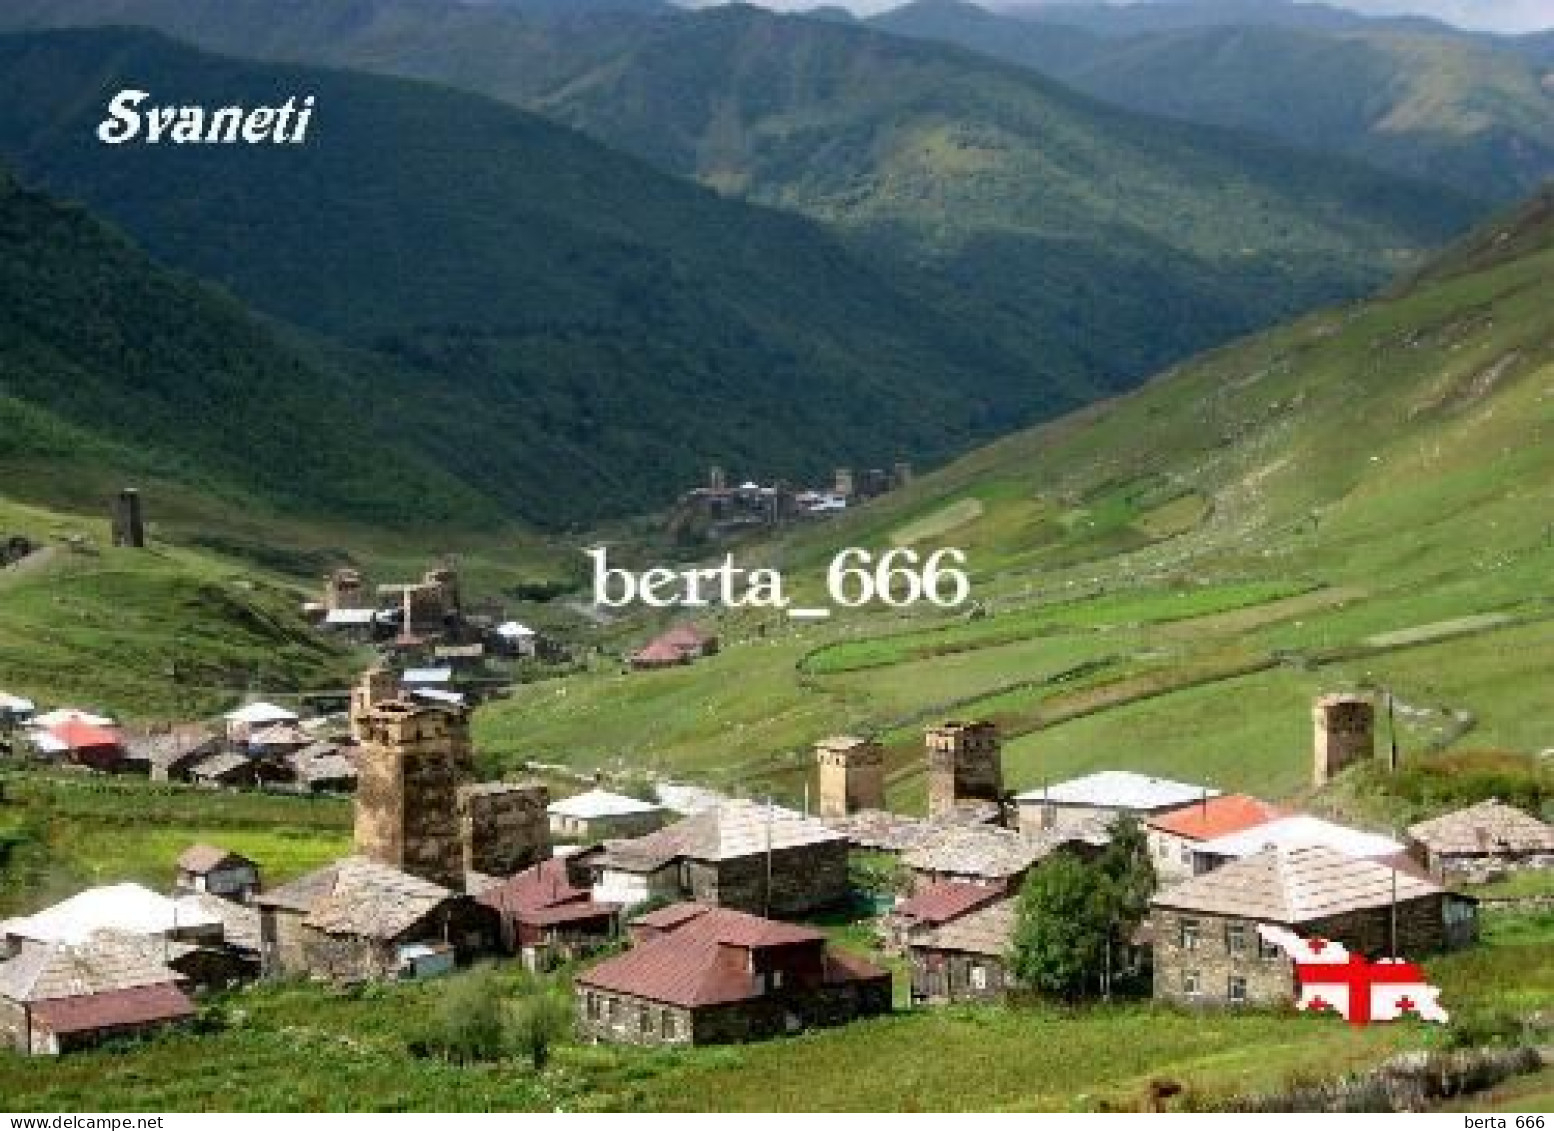 Georgia Svaneti Landscape UNESCO New Postcard - Georgia